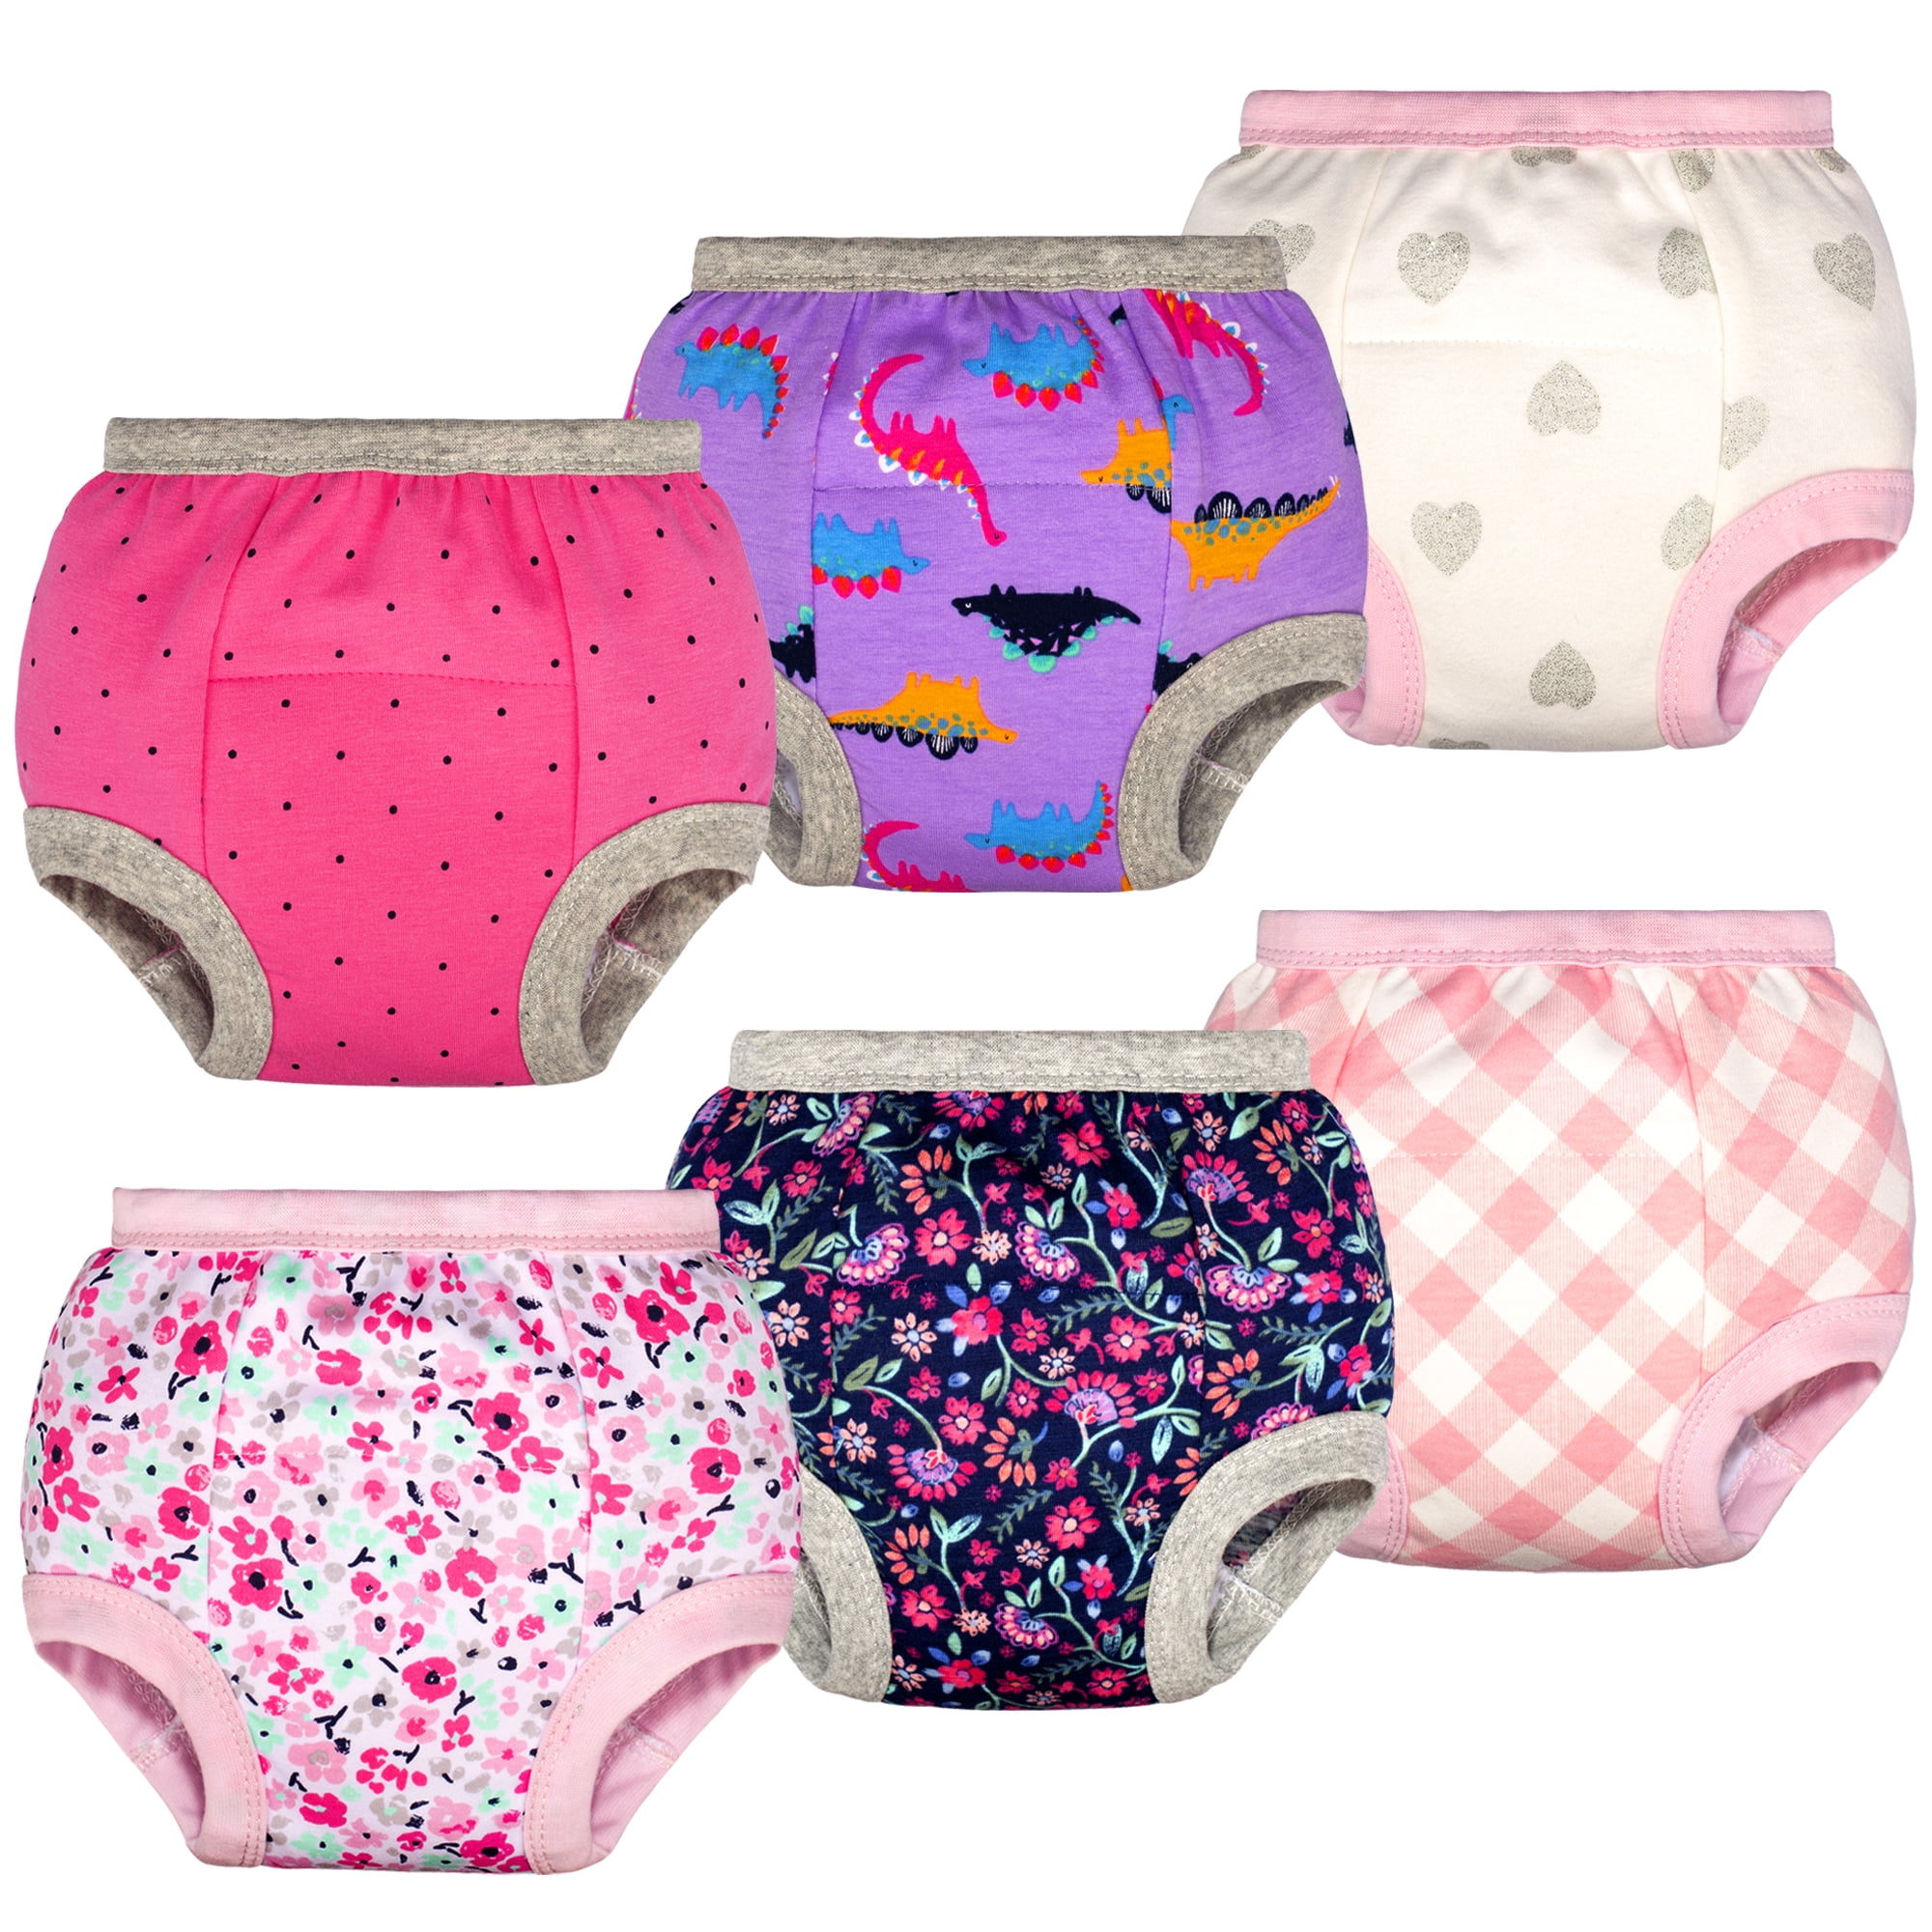 BIG ELEPHANT Toddler Girls Potty Training Pants, Cotton Absorbent Training  Underwear, 12-24 Months 